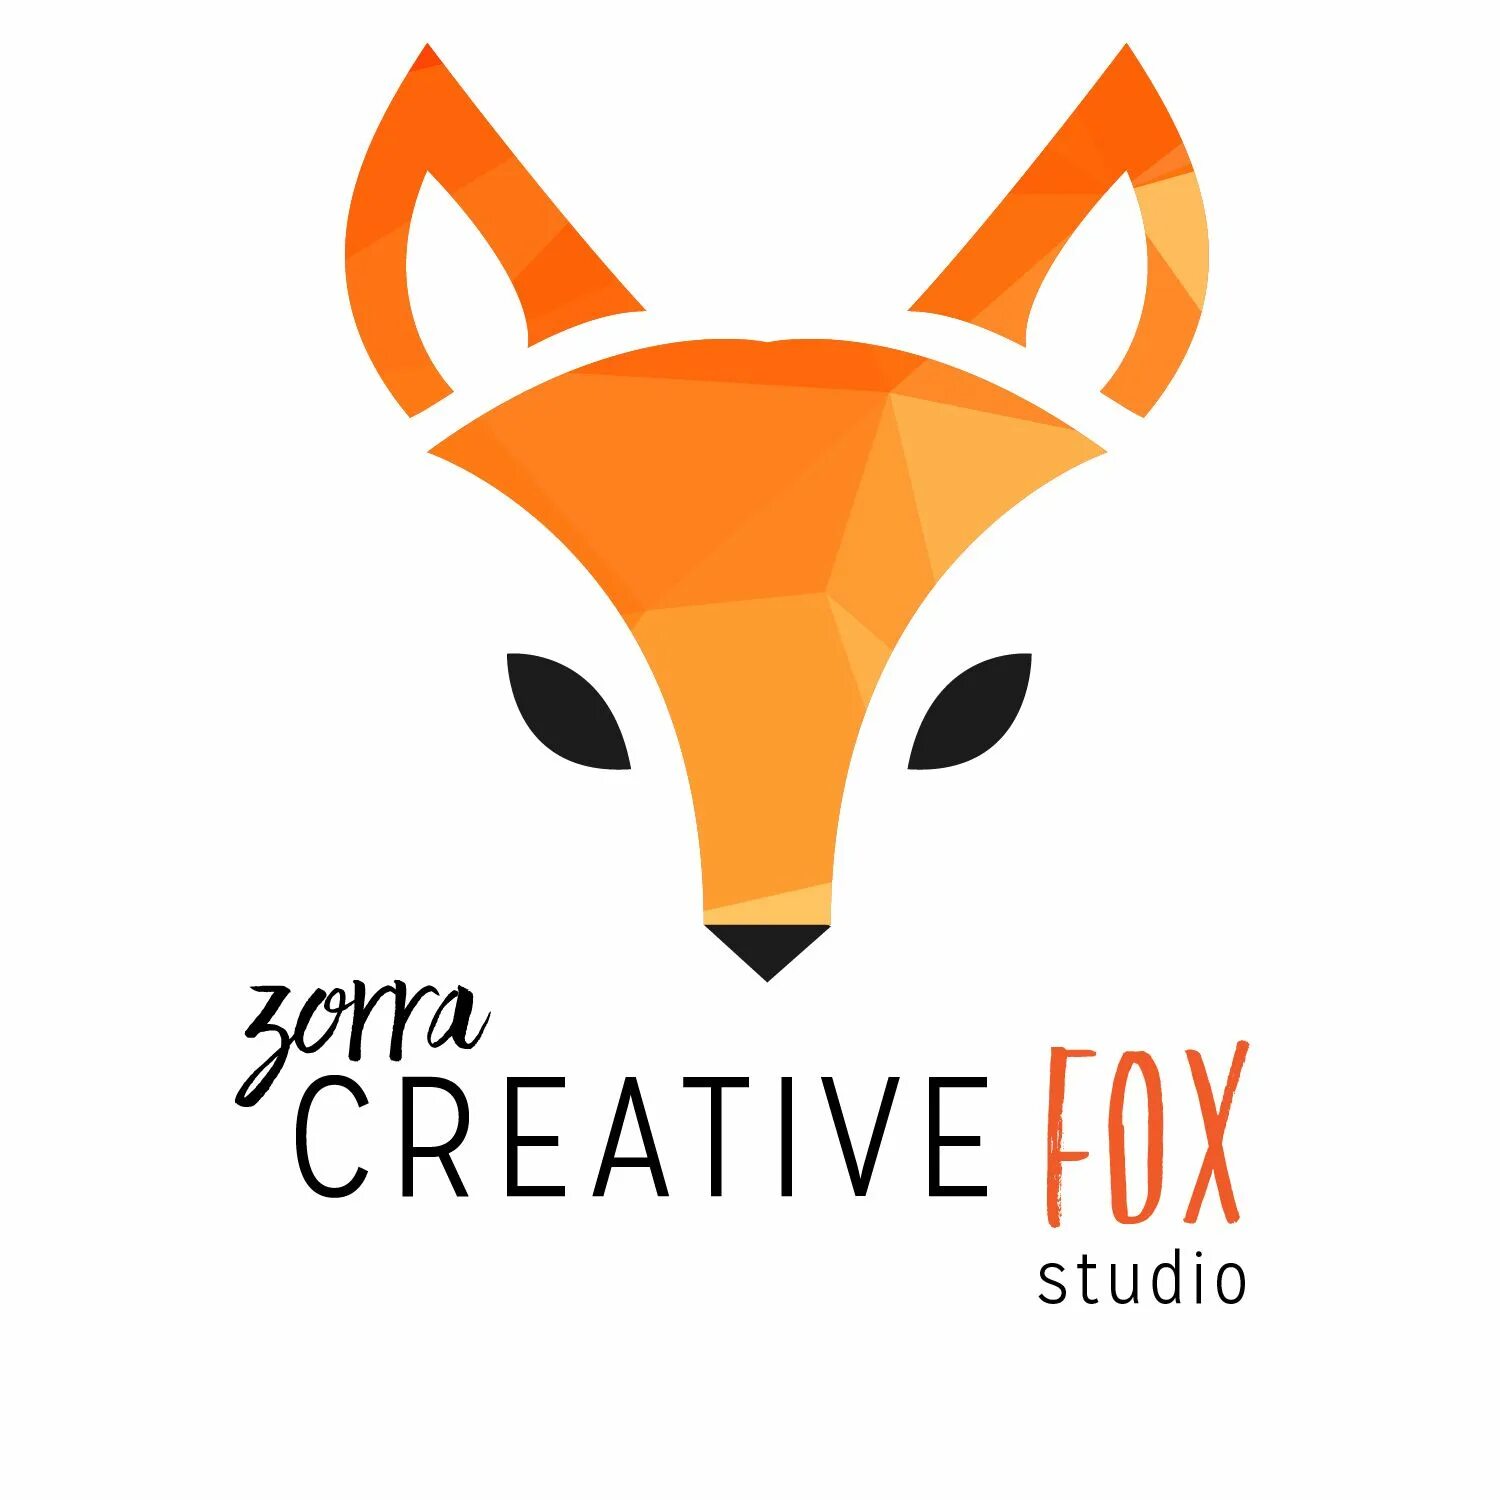 Креативная лиса. Studio Fox логотип лиса. Одежда с логотипом лисы. Лис полигонами.